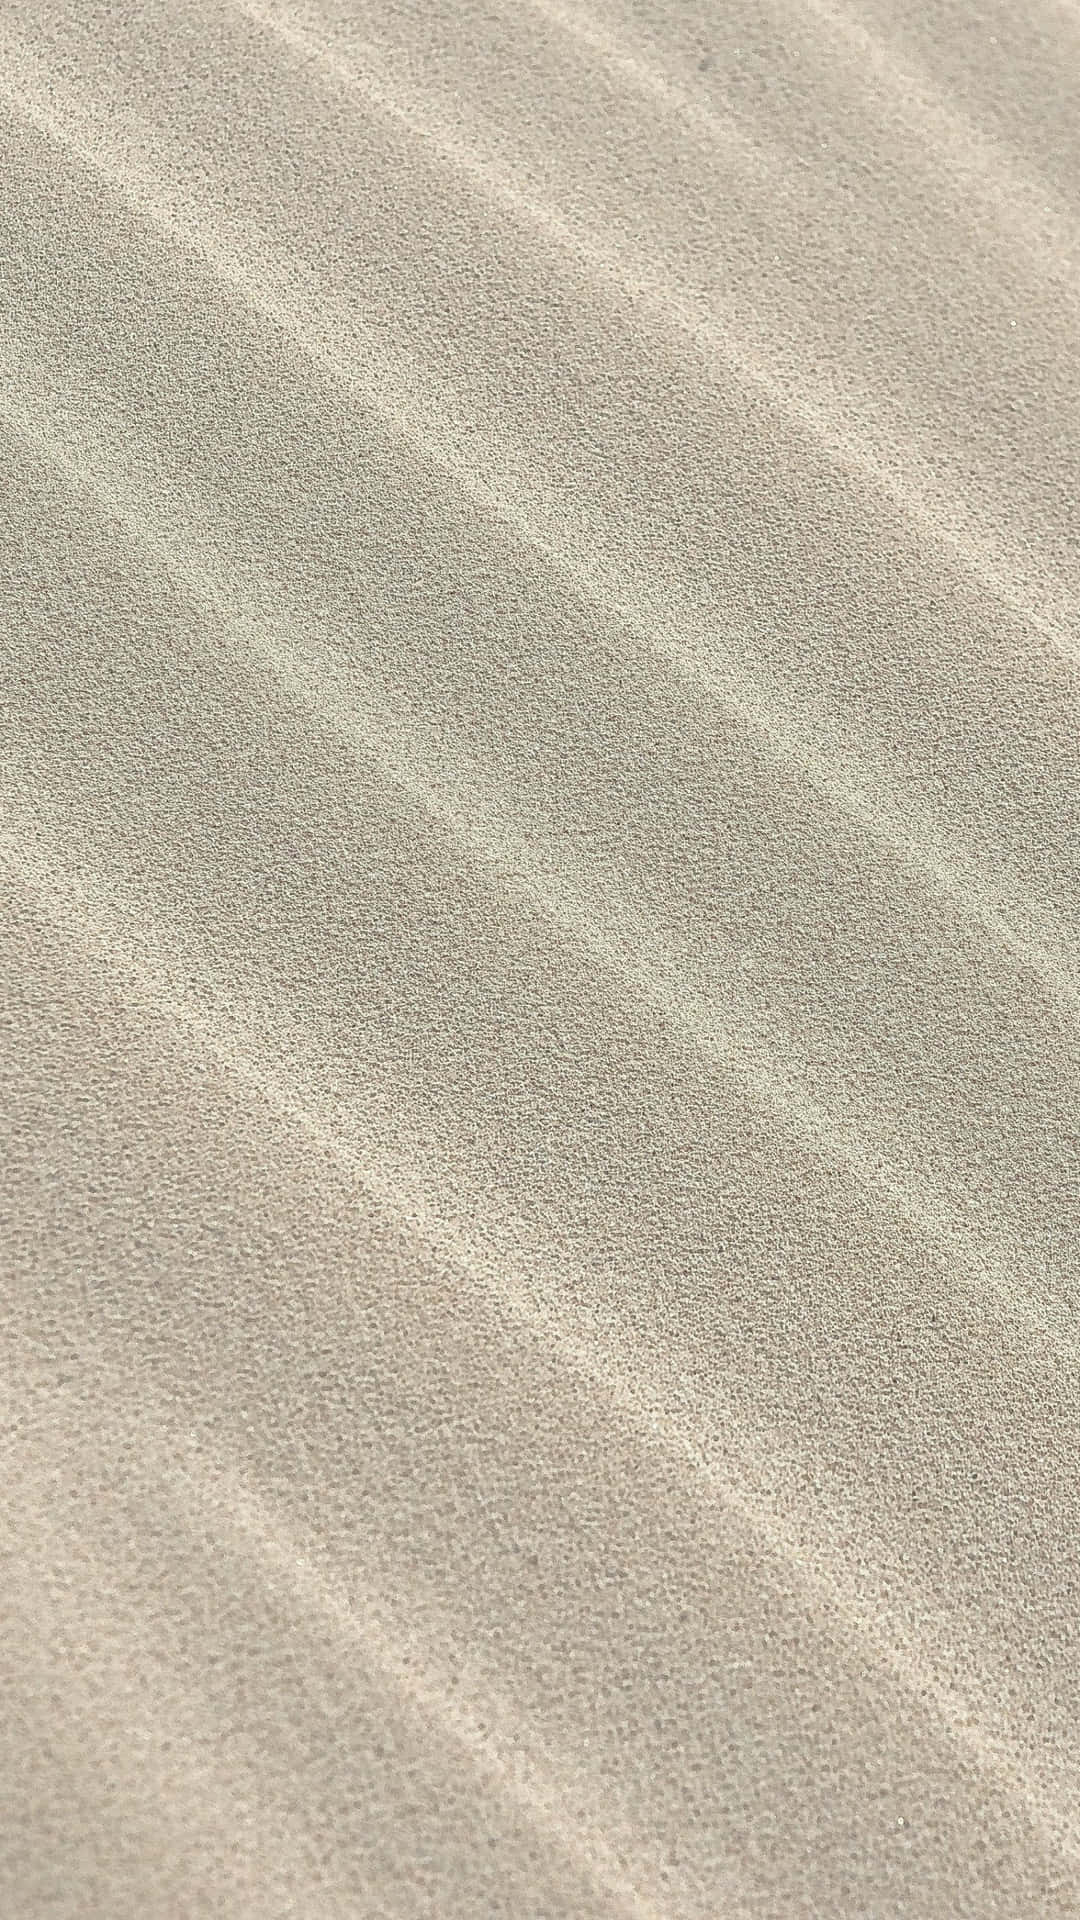 Symmetrical Fine Sand Pattern Wallpaper